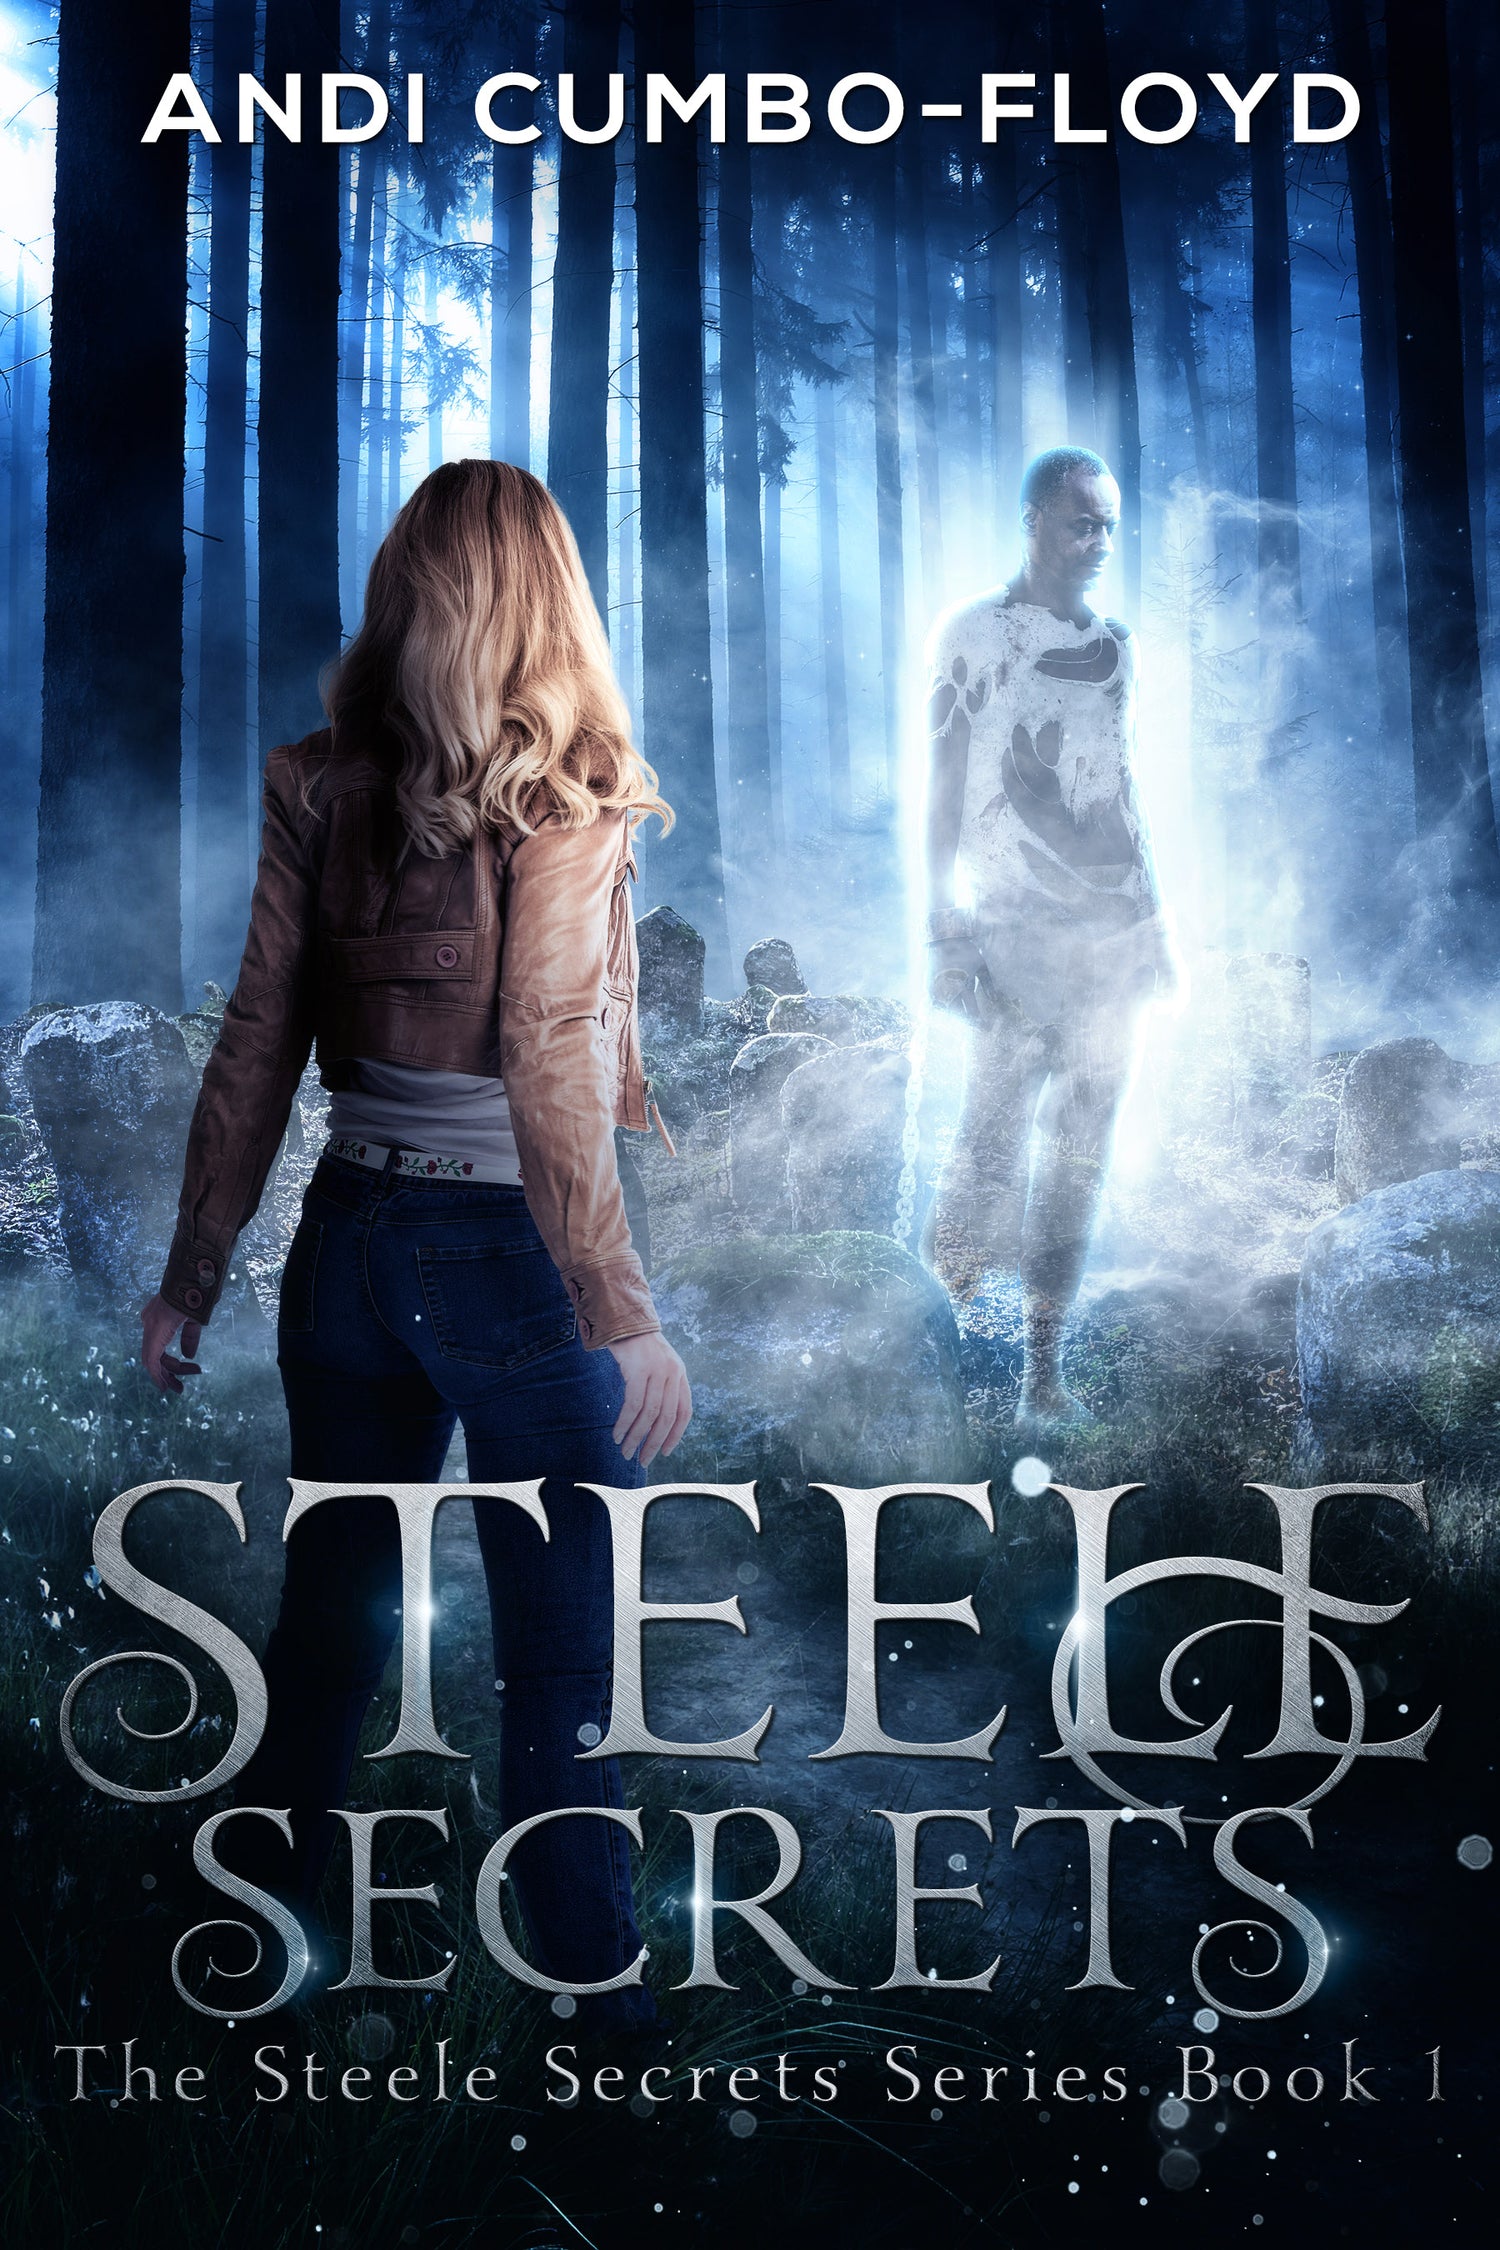 The Steele Secrets Series